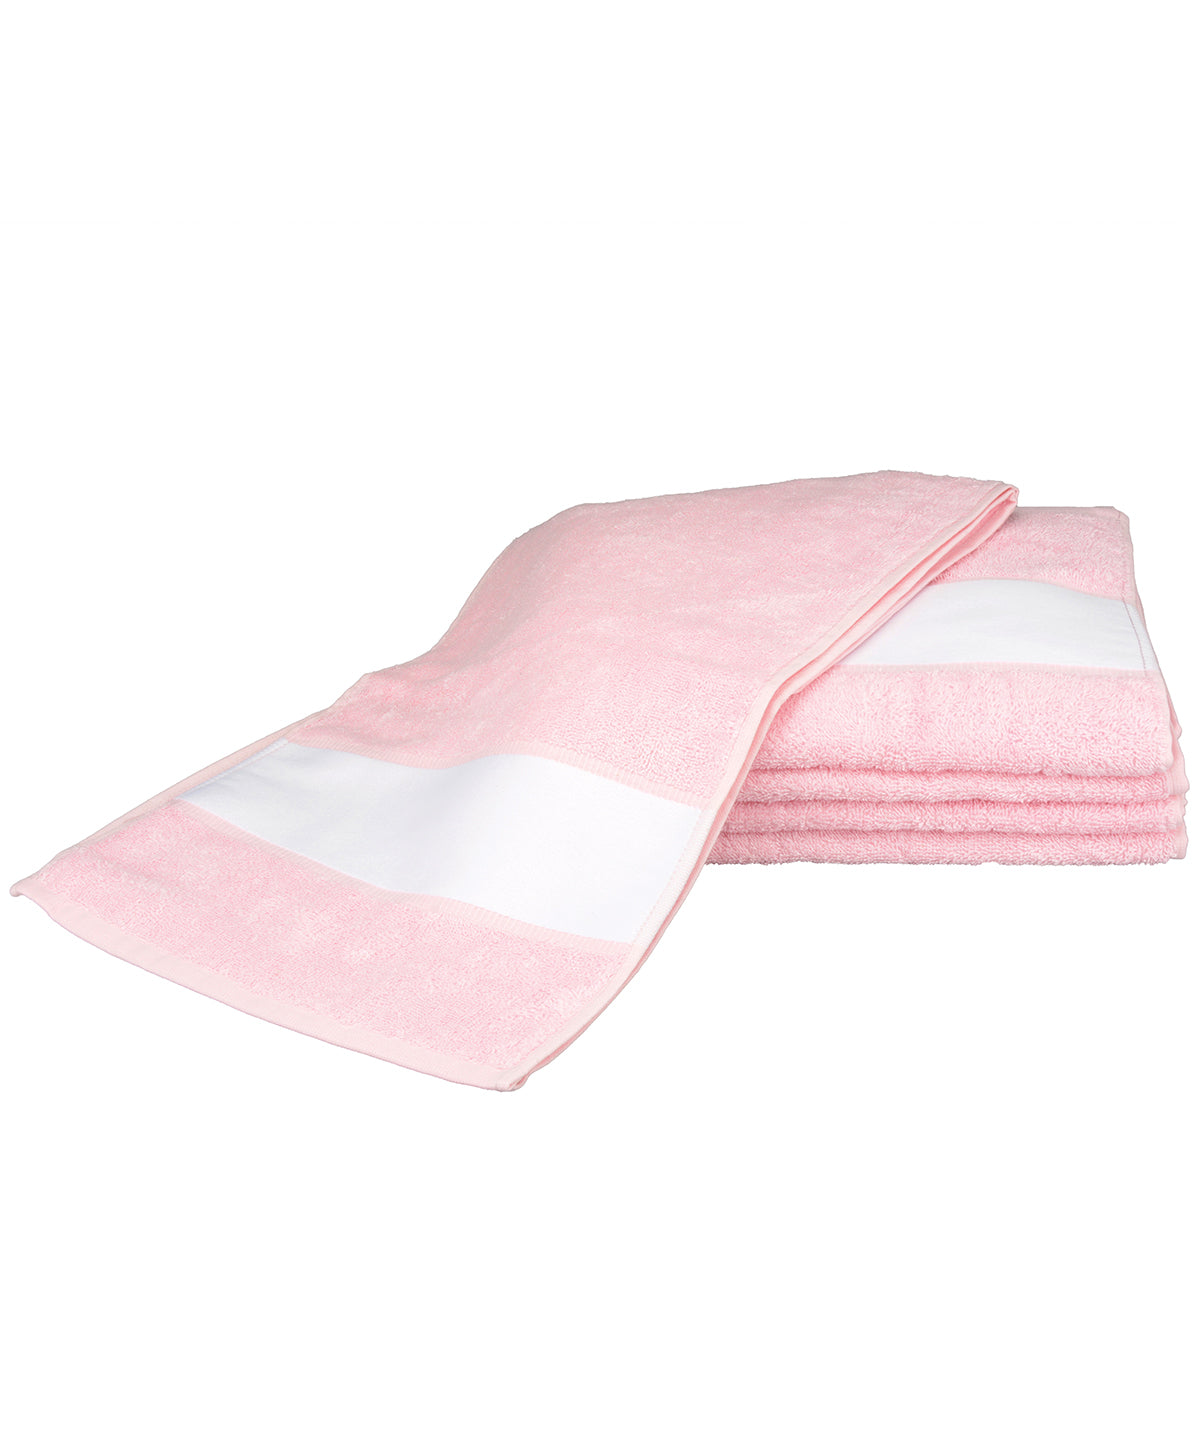 Personalised Towels - Light Pink A&R Towels ARTG® SUBLI-Me® sport towel